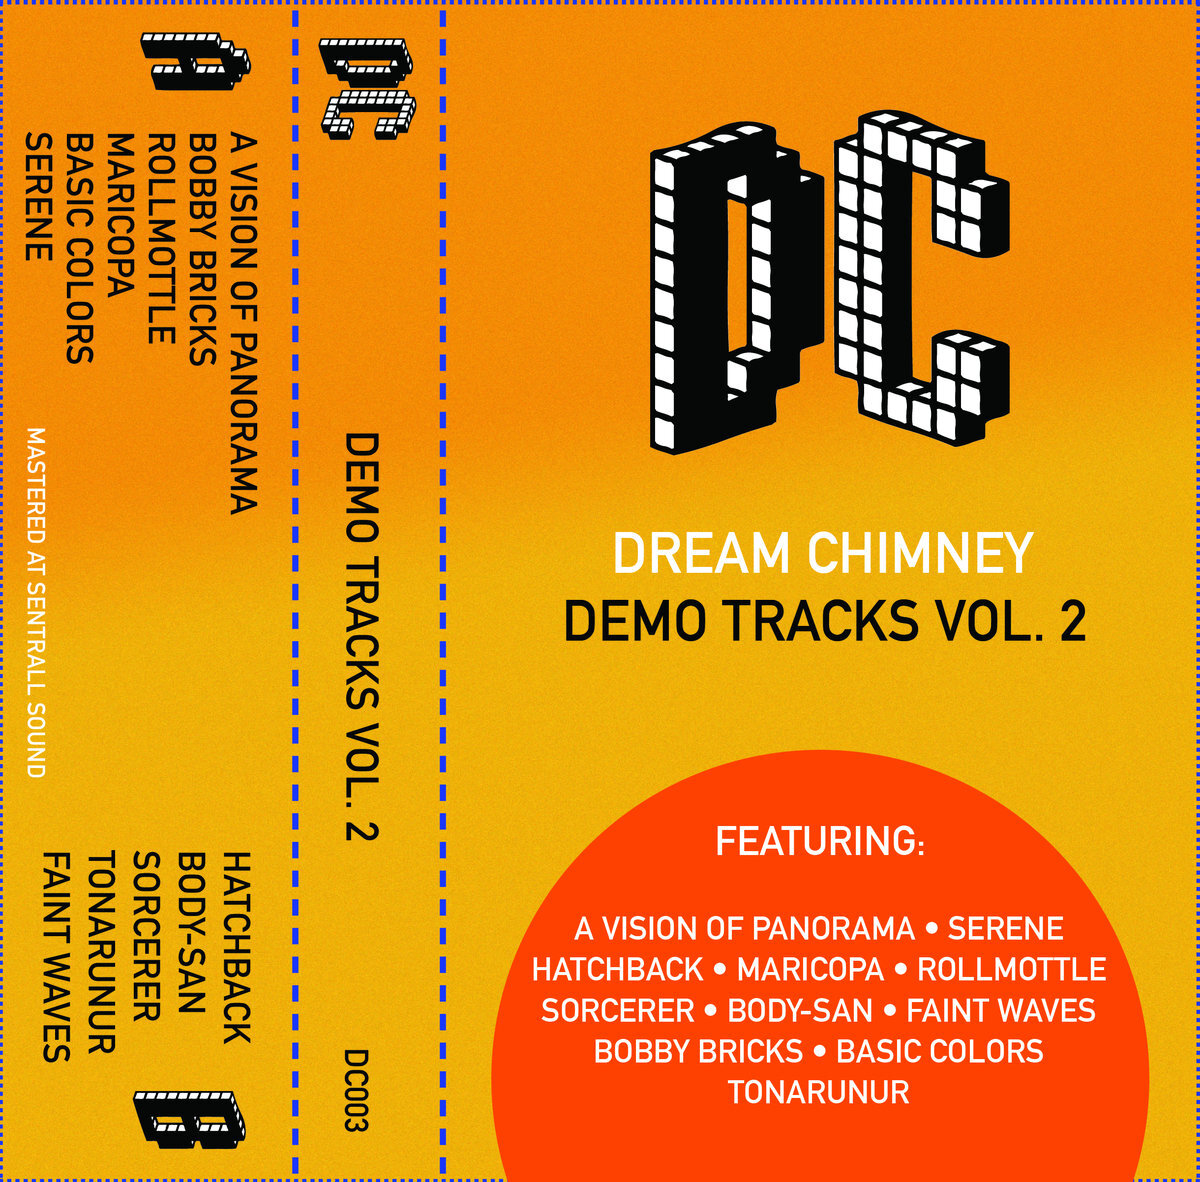 Demo tracks. Bobby Bricks Clothing.